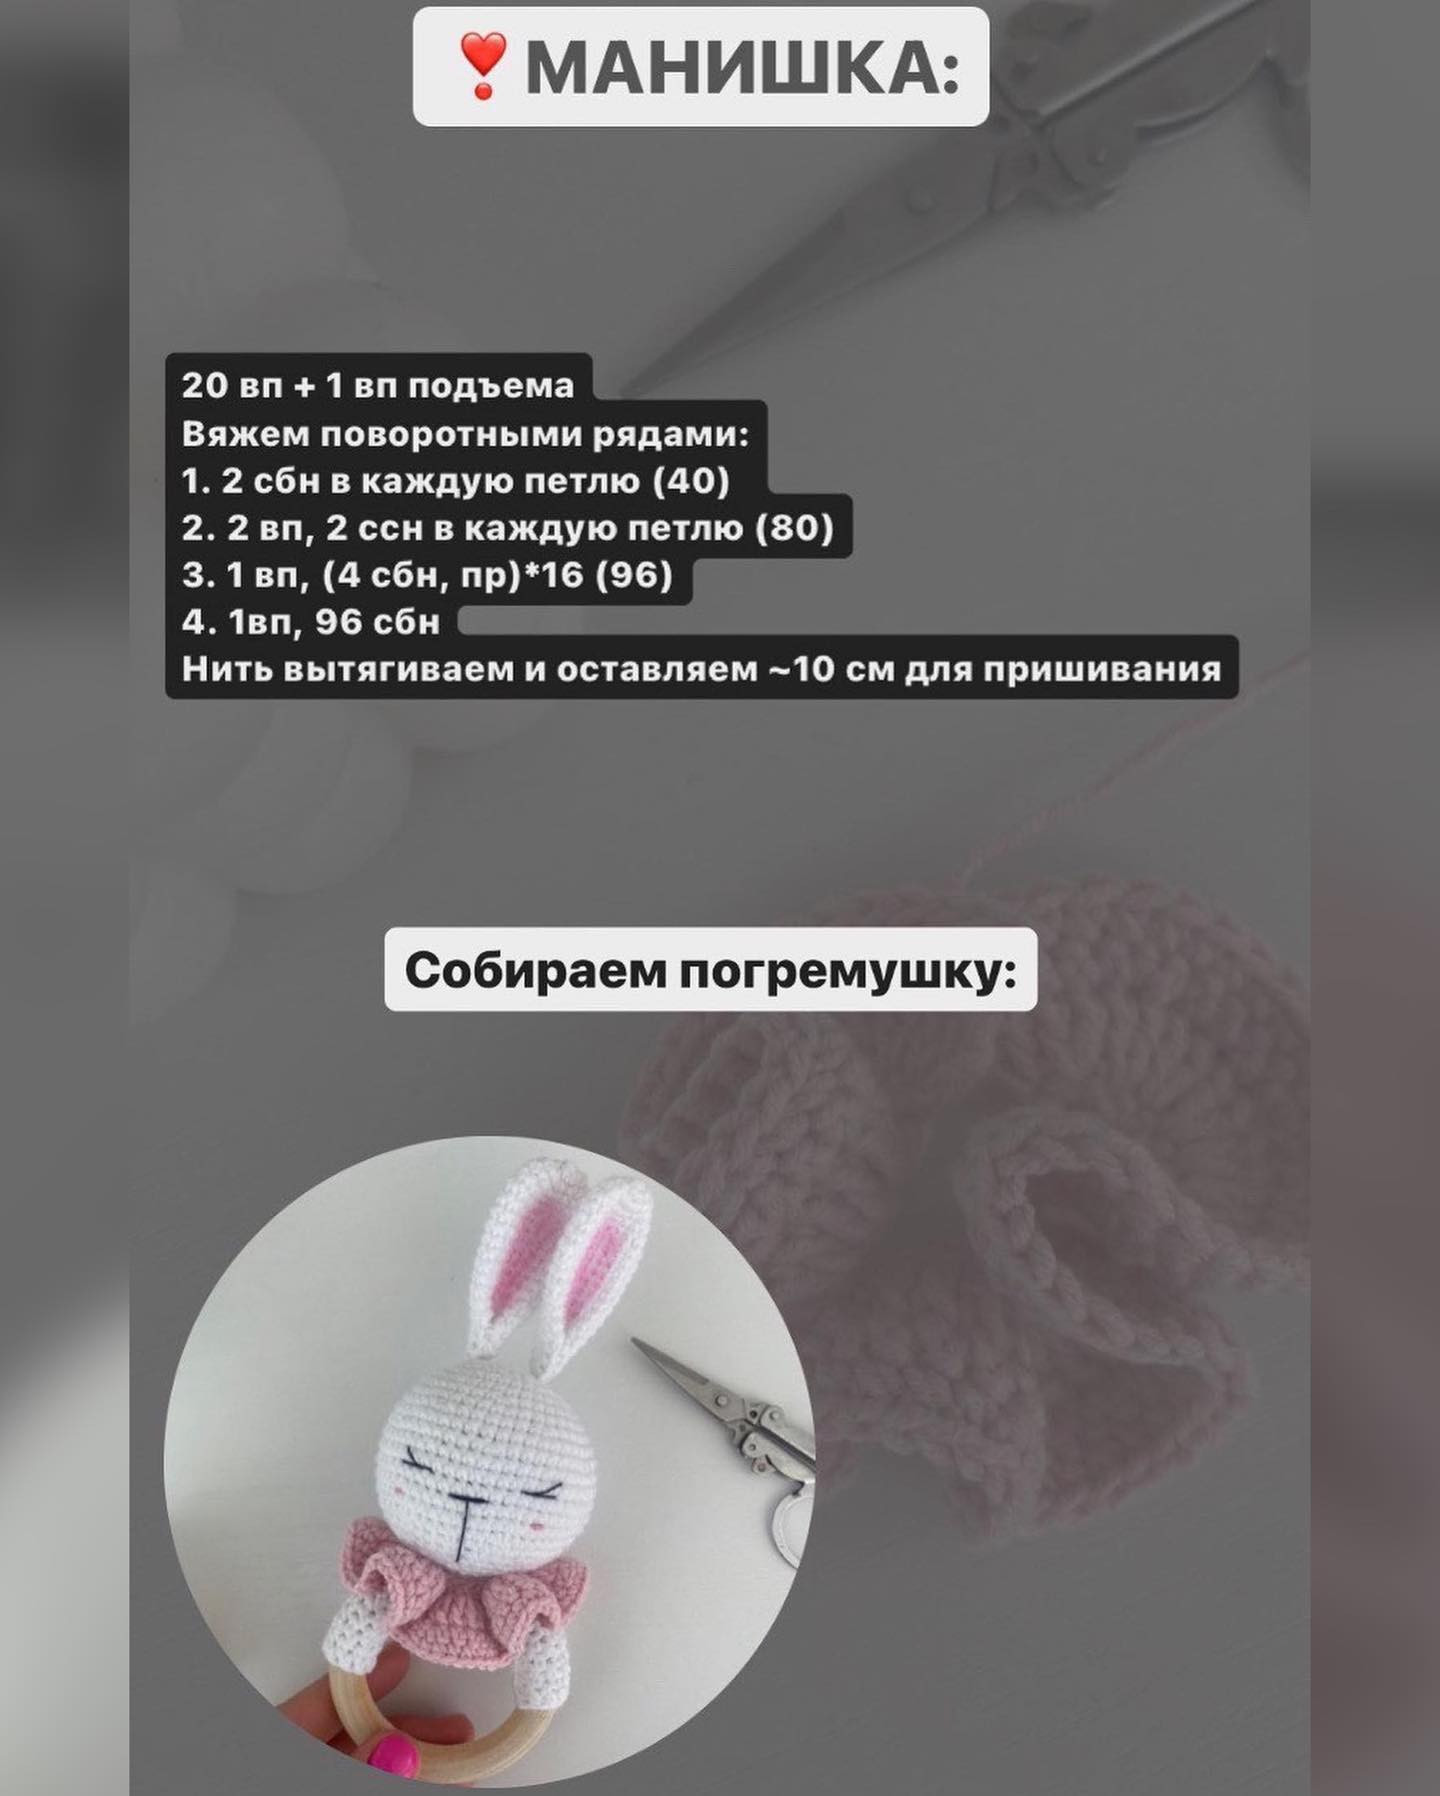 white rabbit dice, pink-eared yellow gray rabbit, crochet pattern